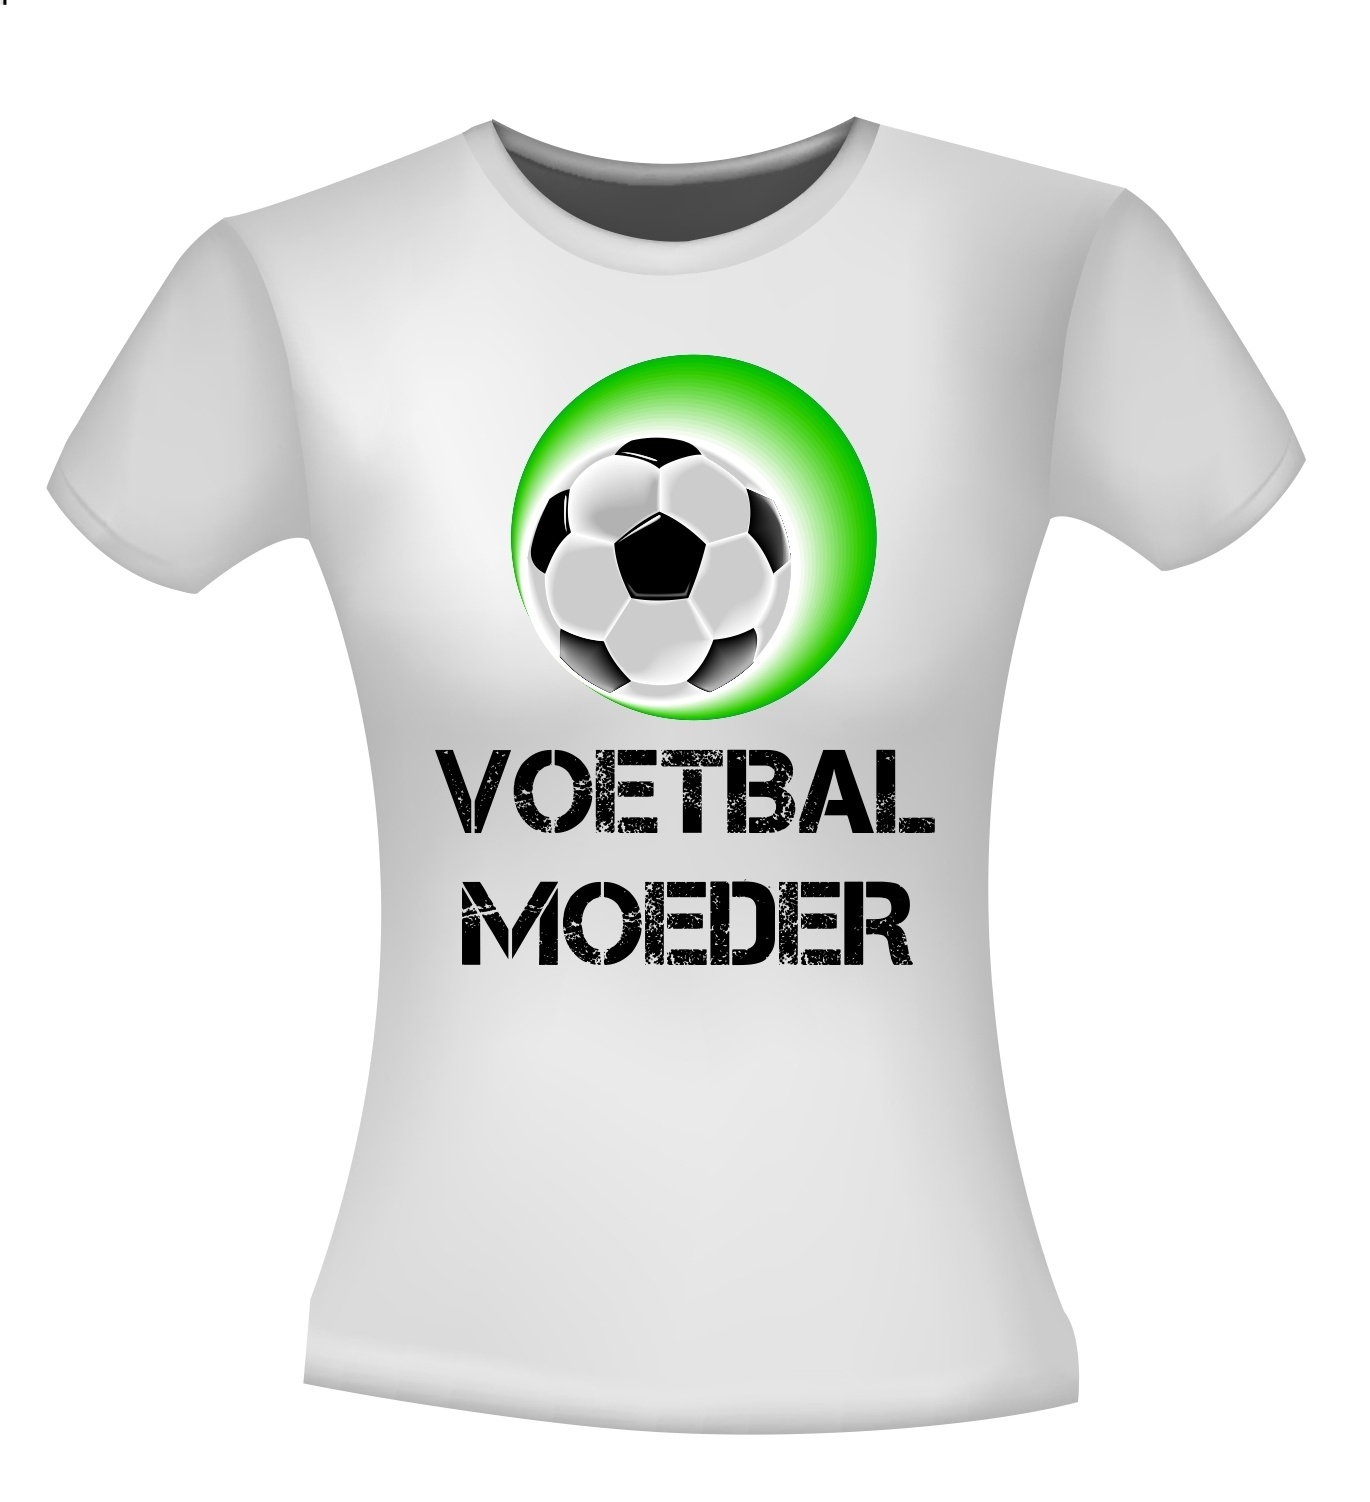 Voetbal moeder T-shirt